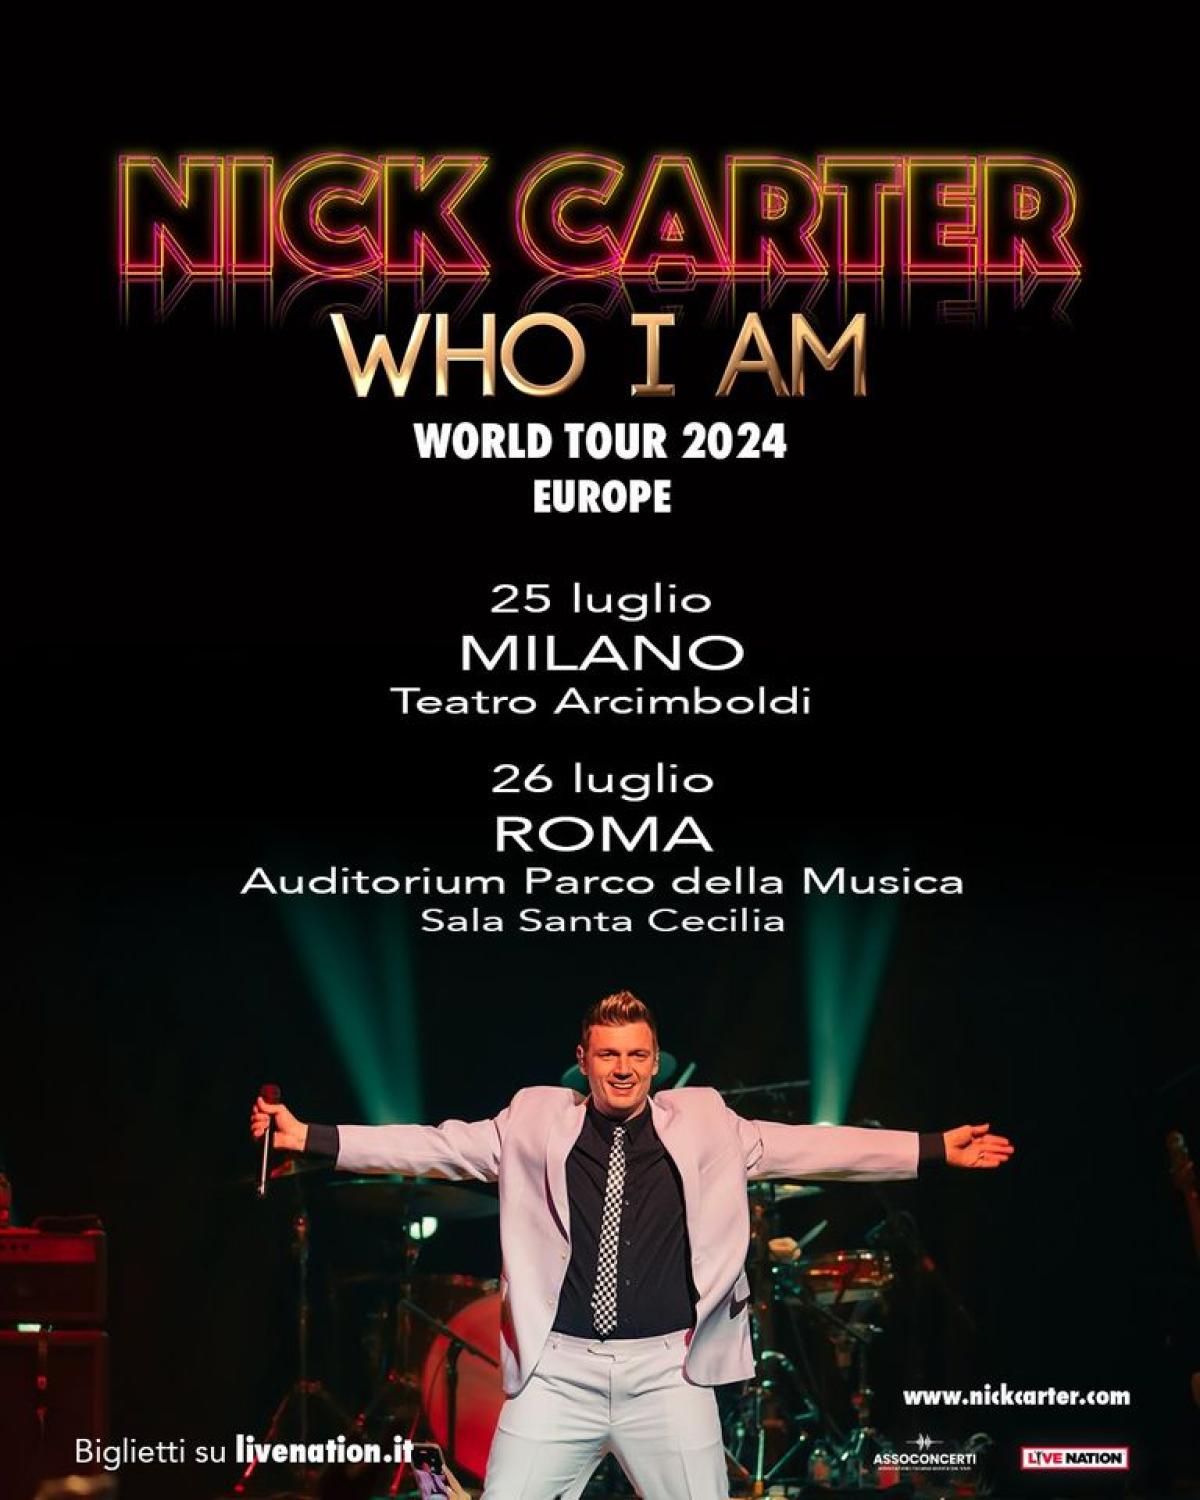 Nick Carter in der Cavea Auditorium Parco della Musica Tickets